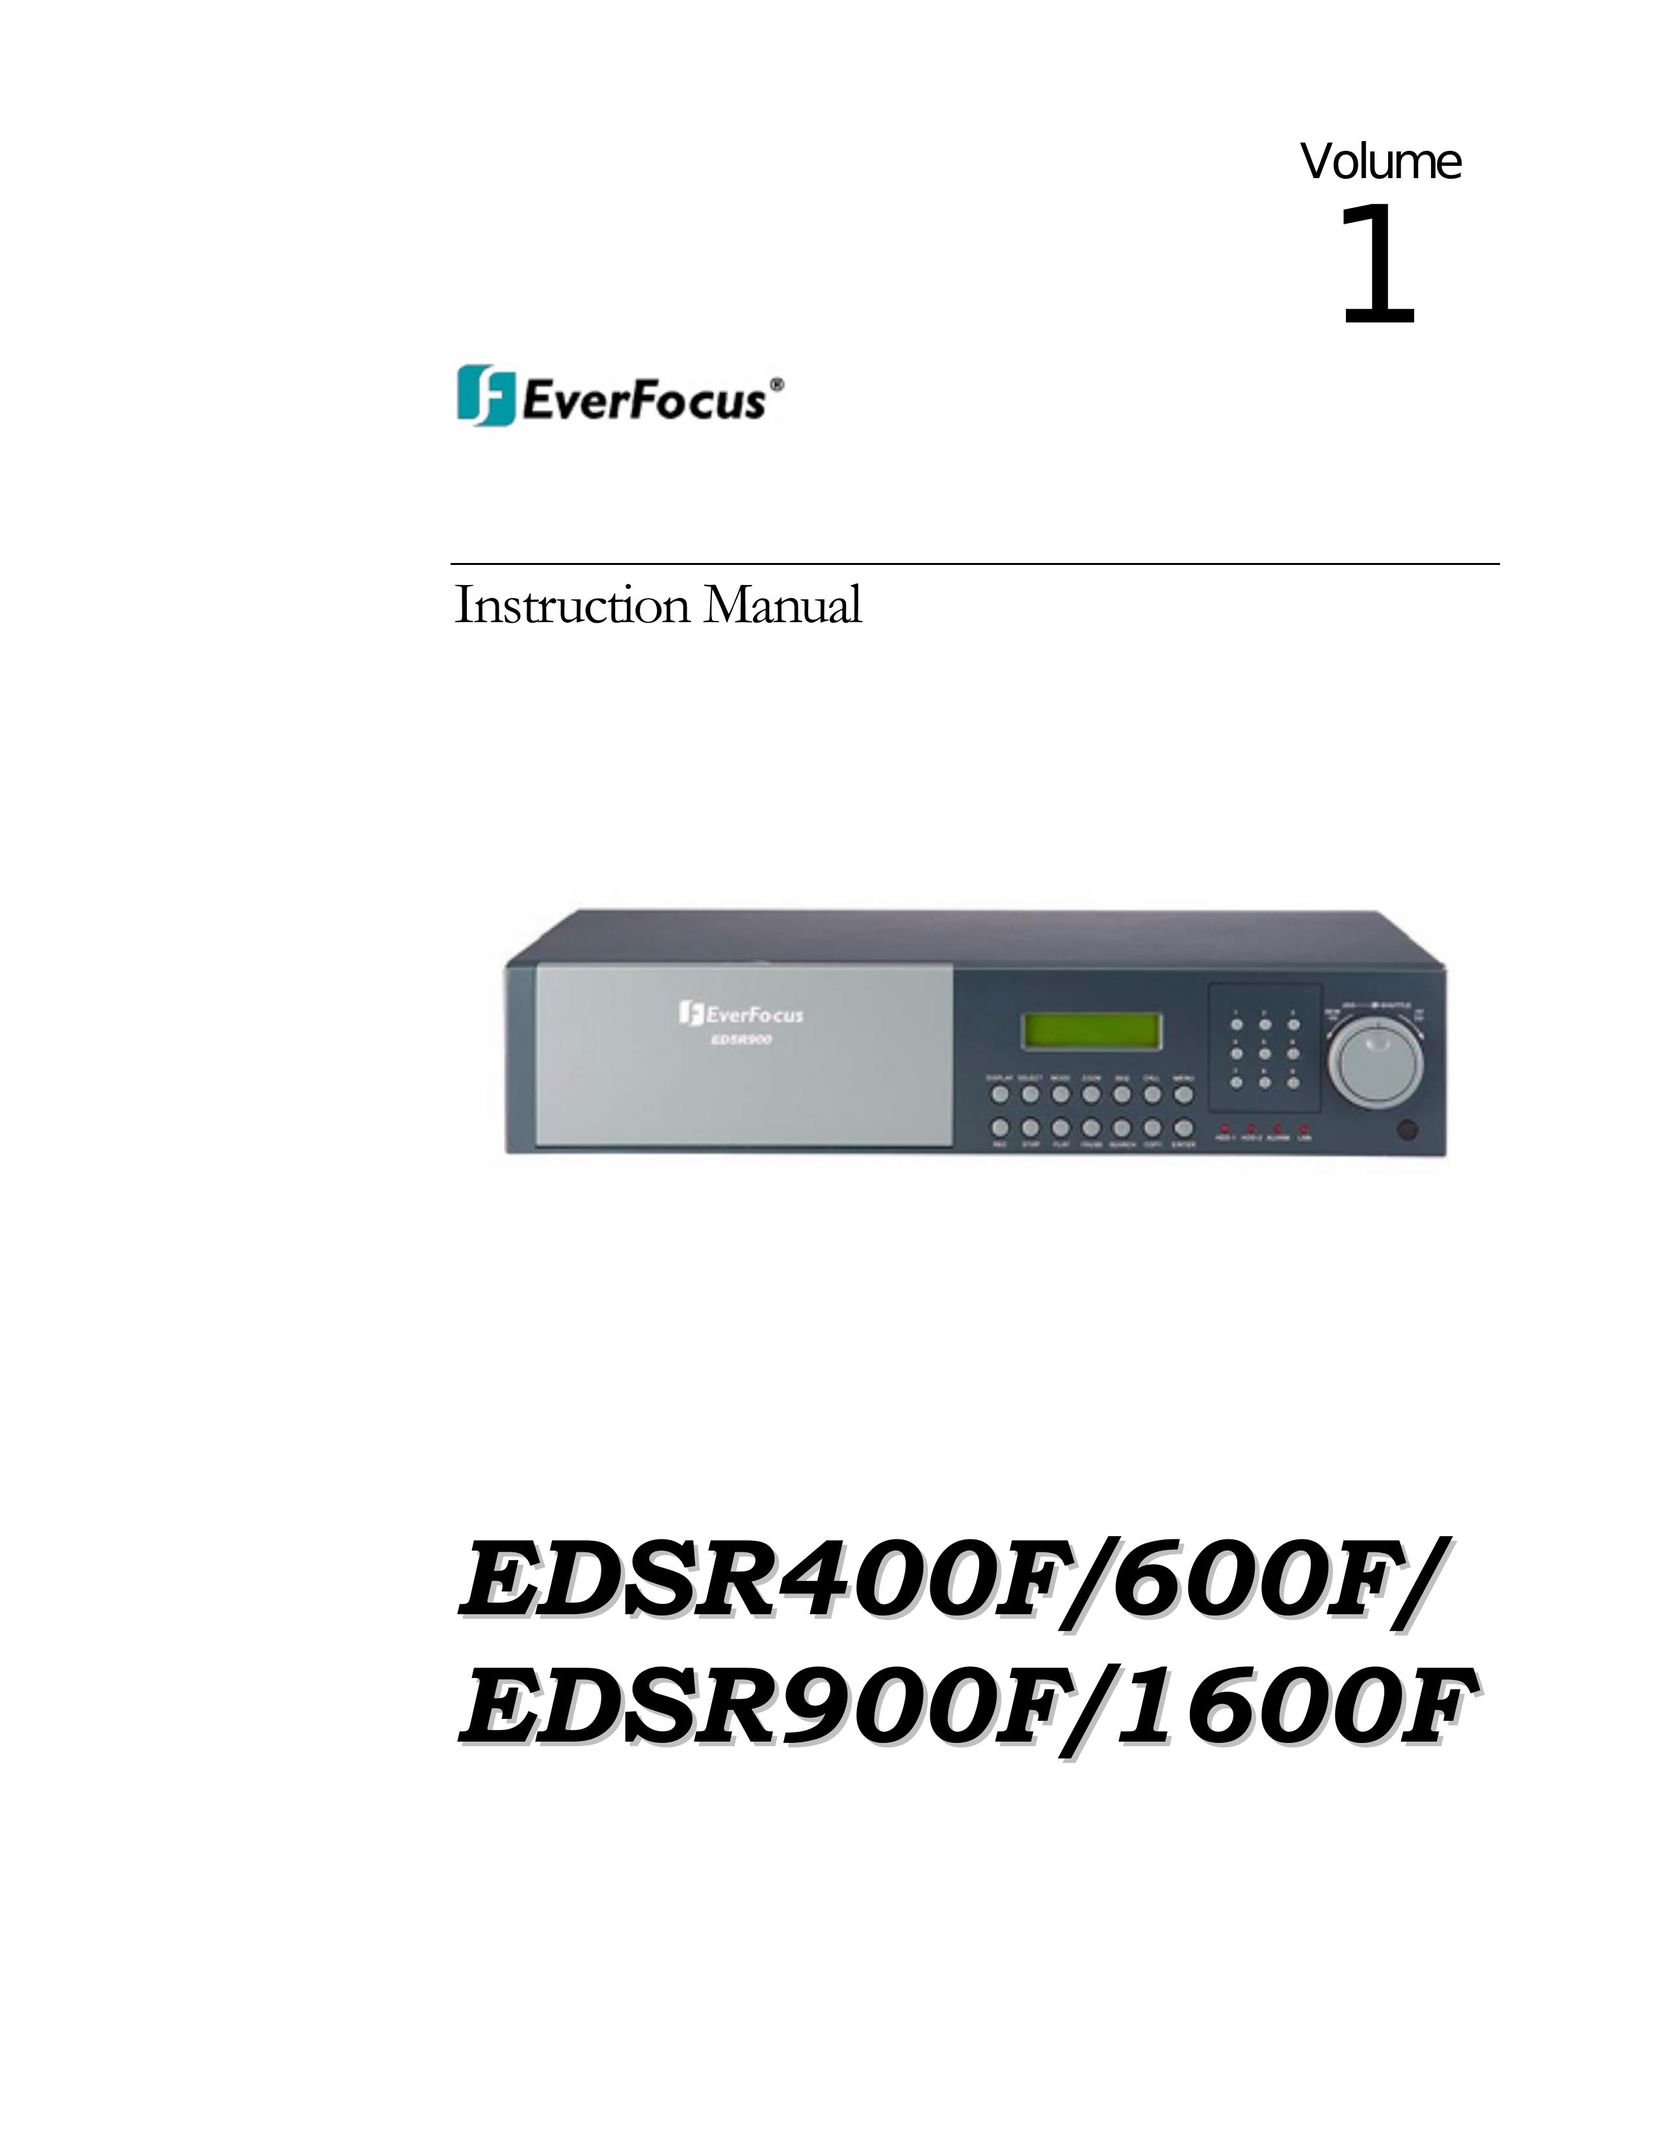 EverFocus EDSR1600F Boiler User Manual